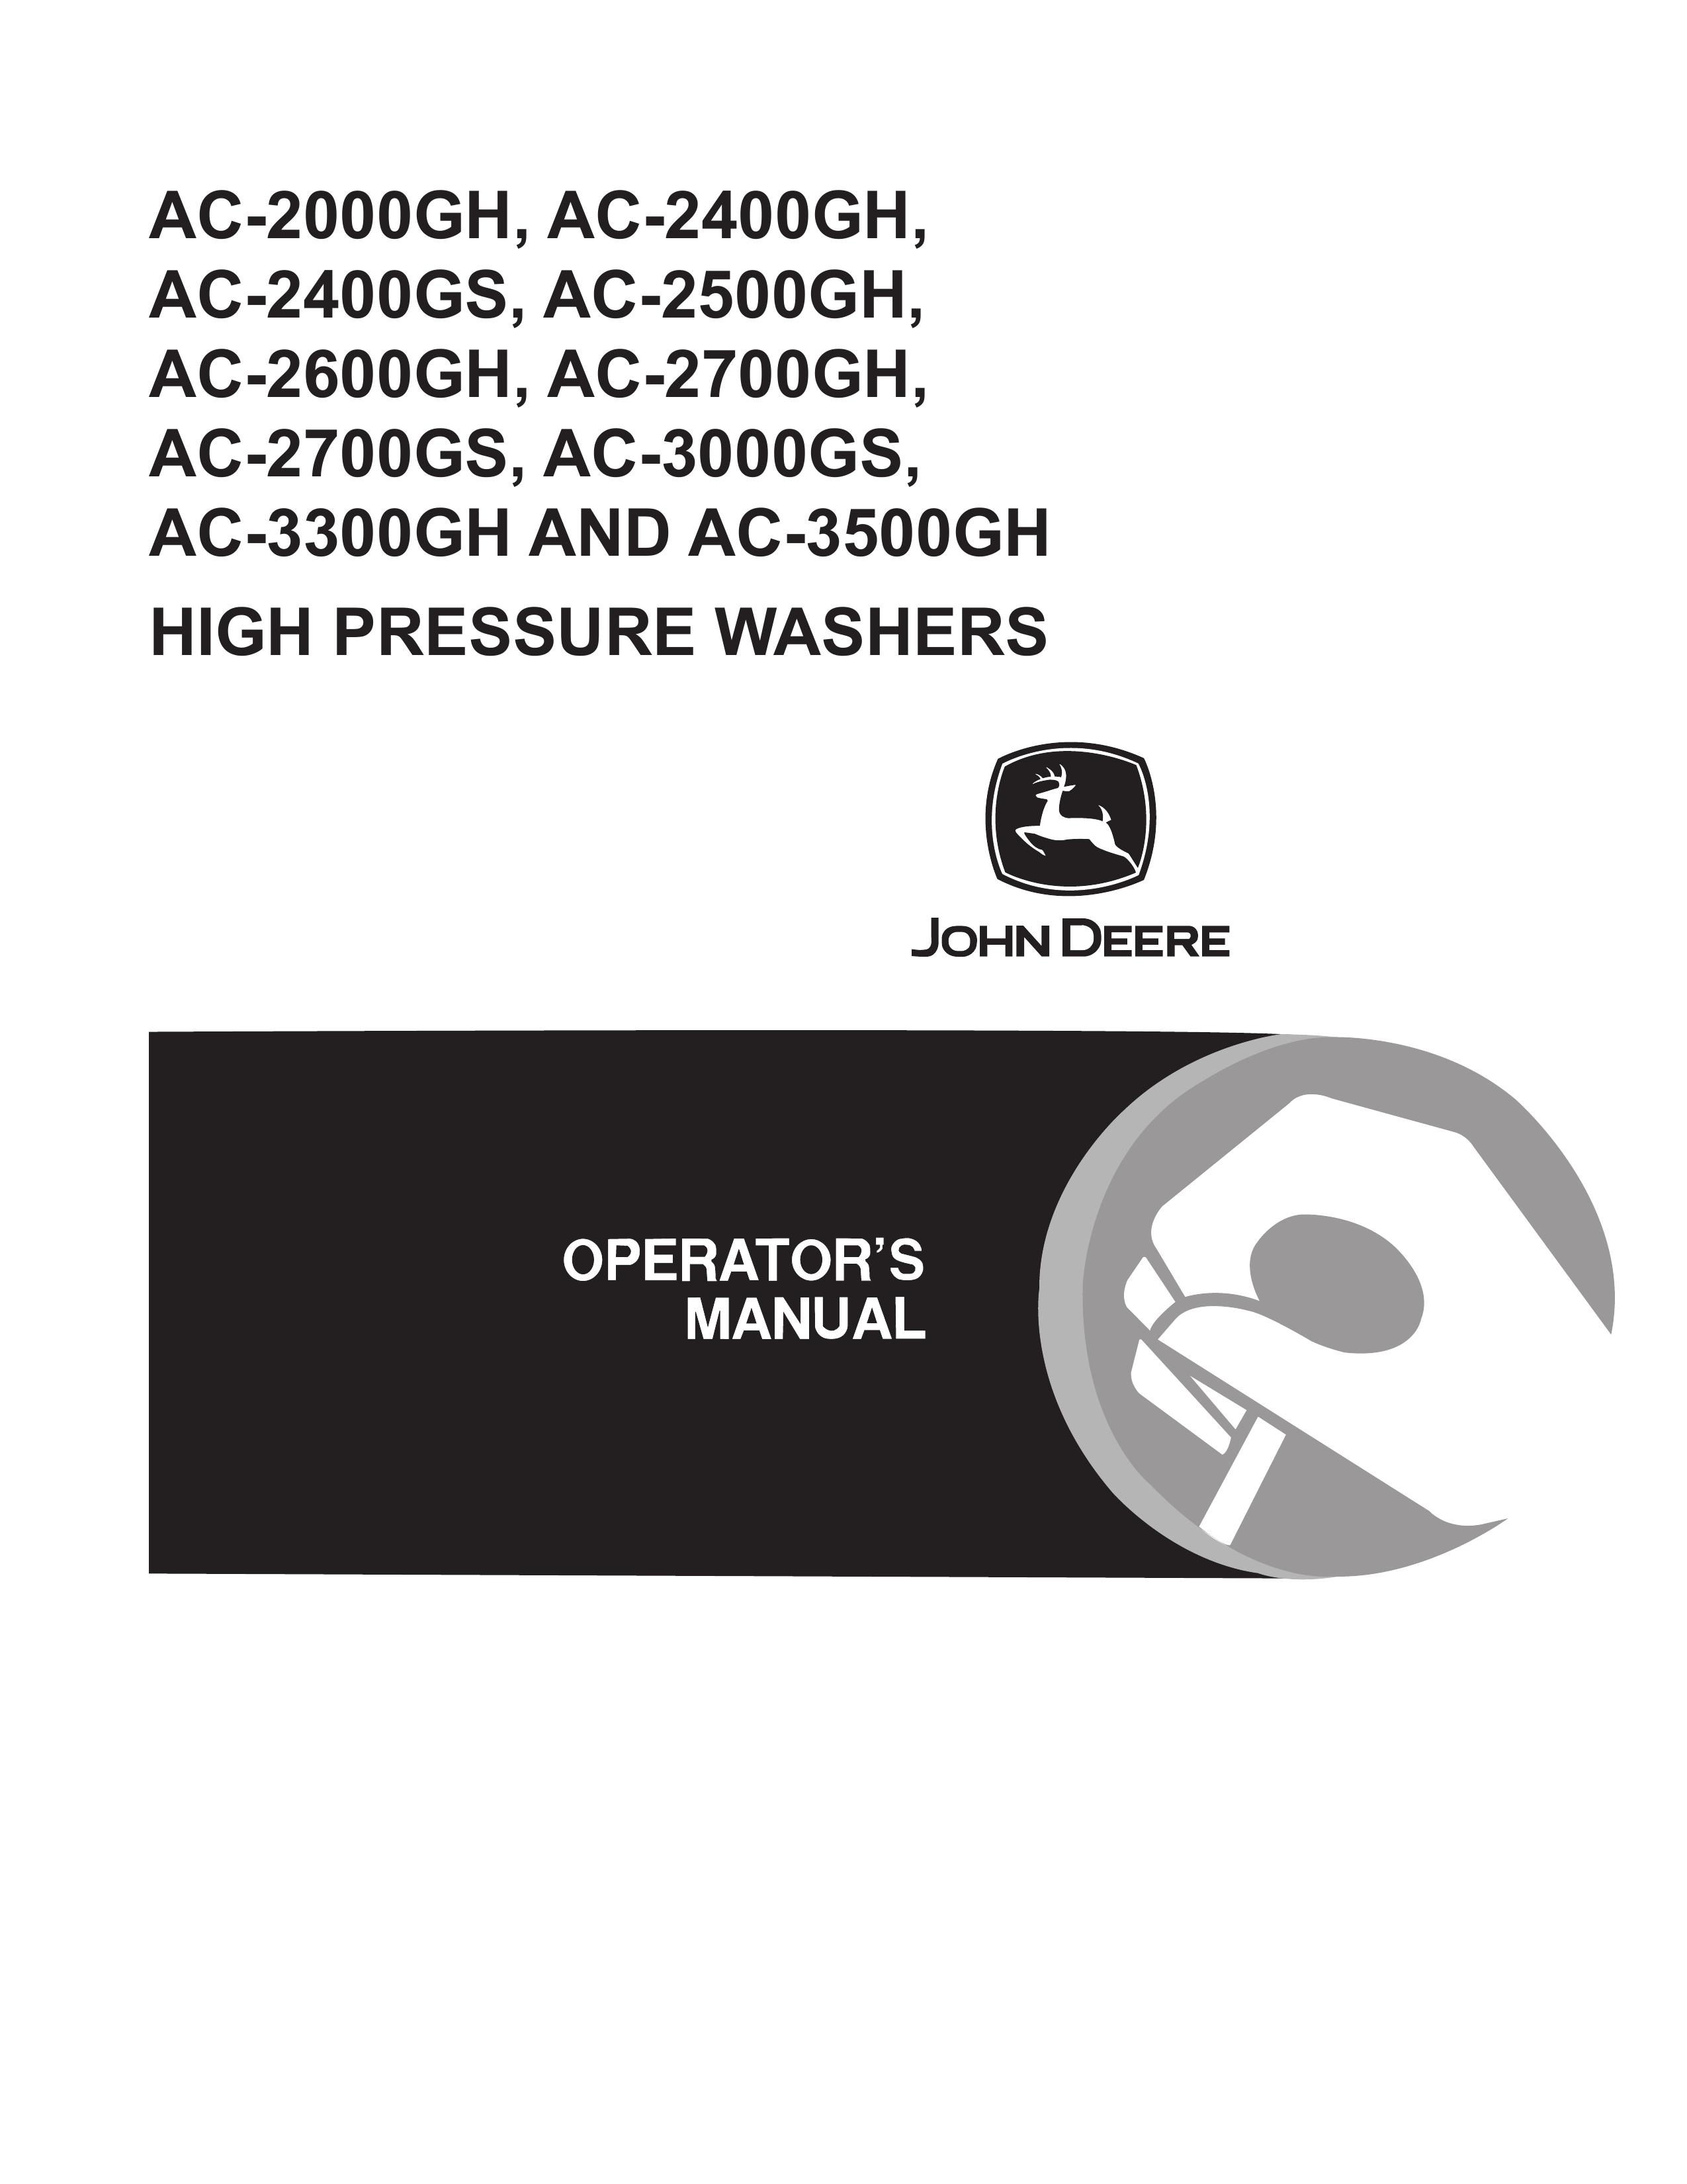 John Deere AC-3500GH Washer User Manual